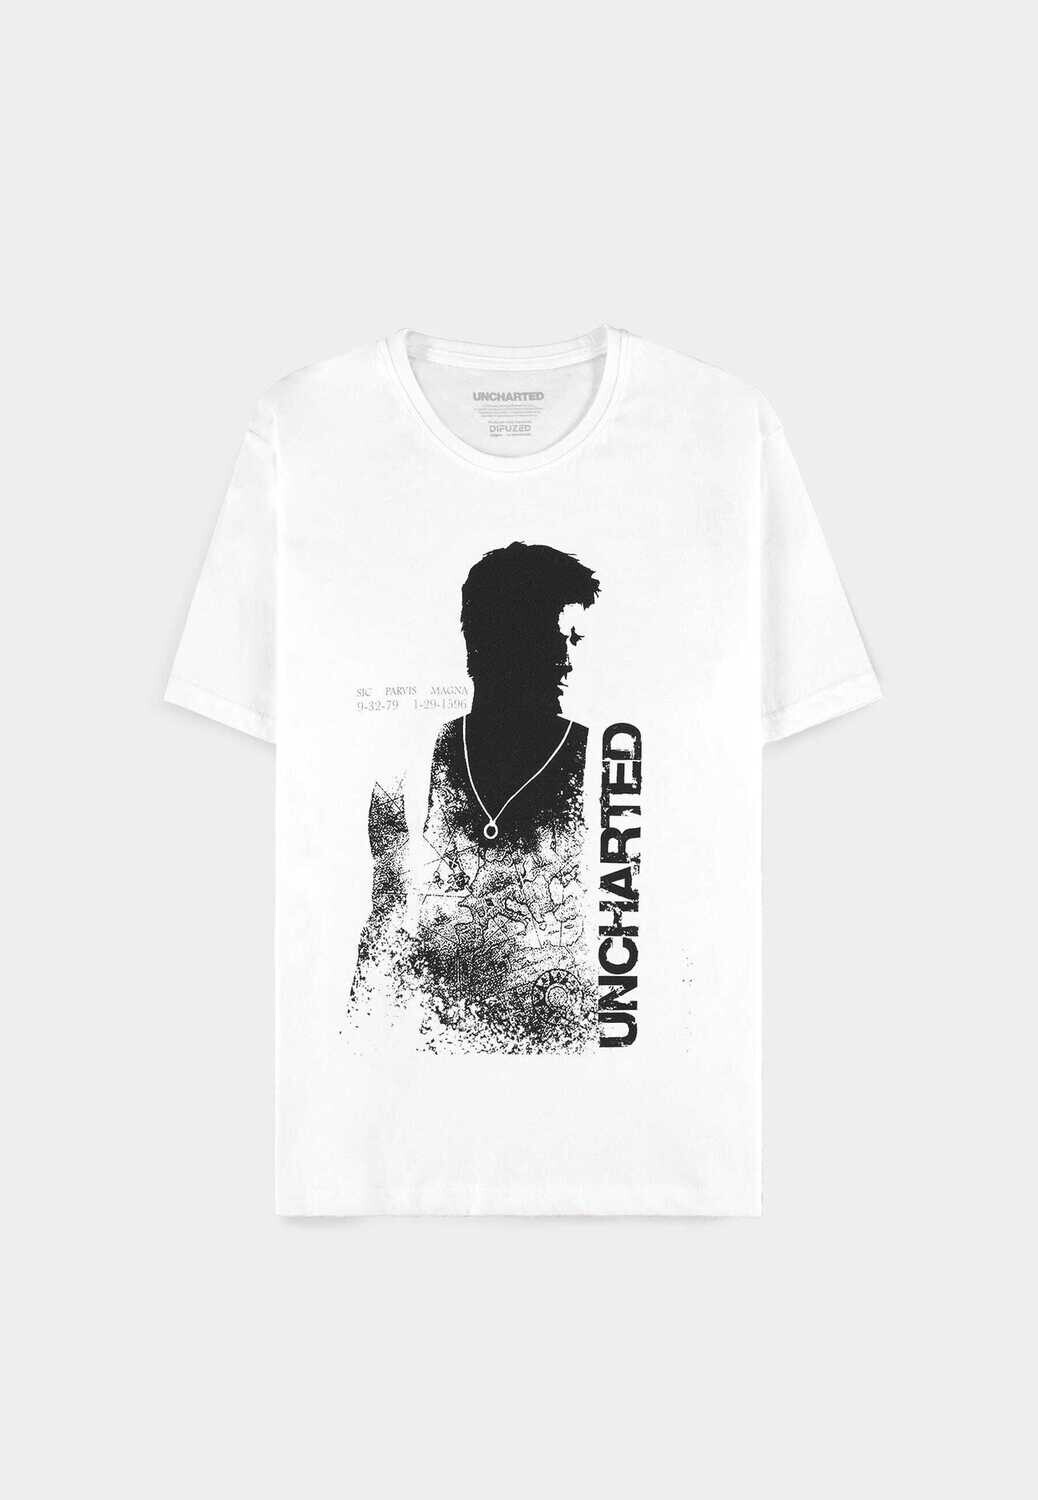 Uncharted - Men's Short Sleeved T-shirt